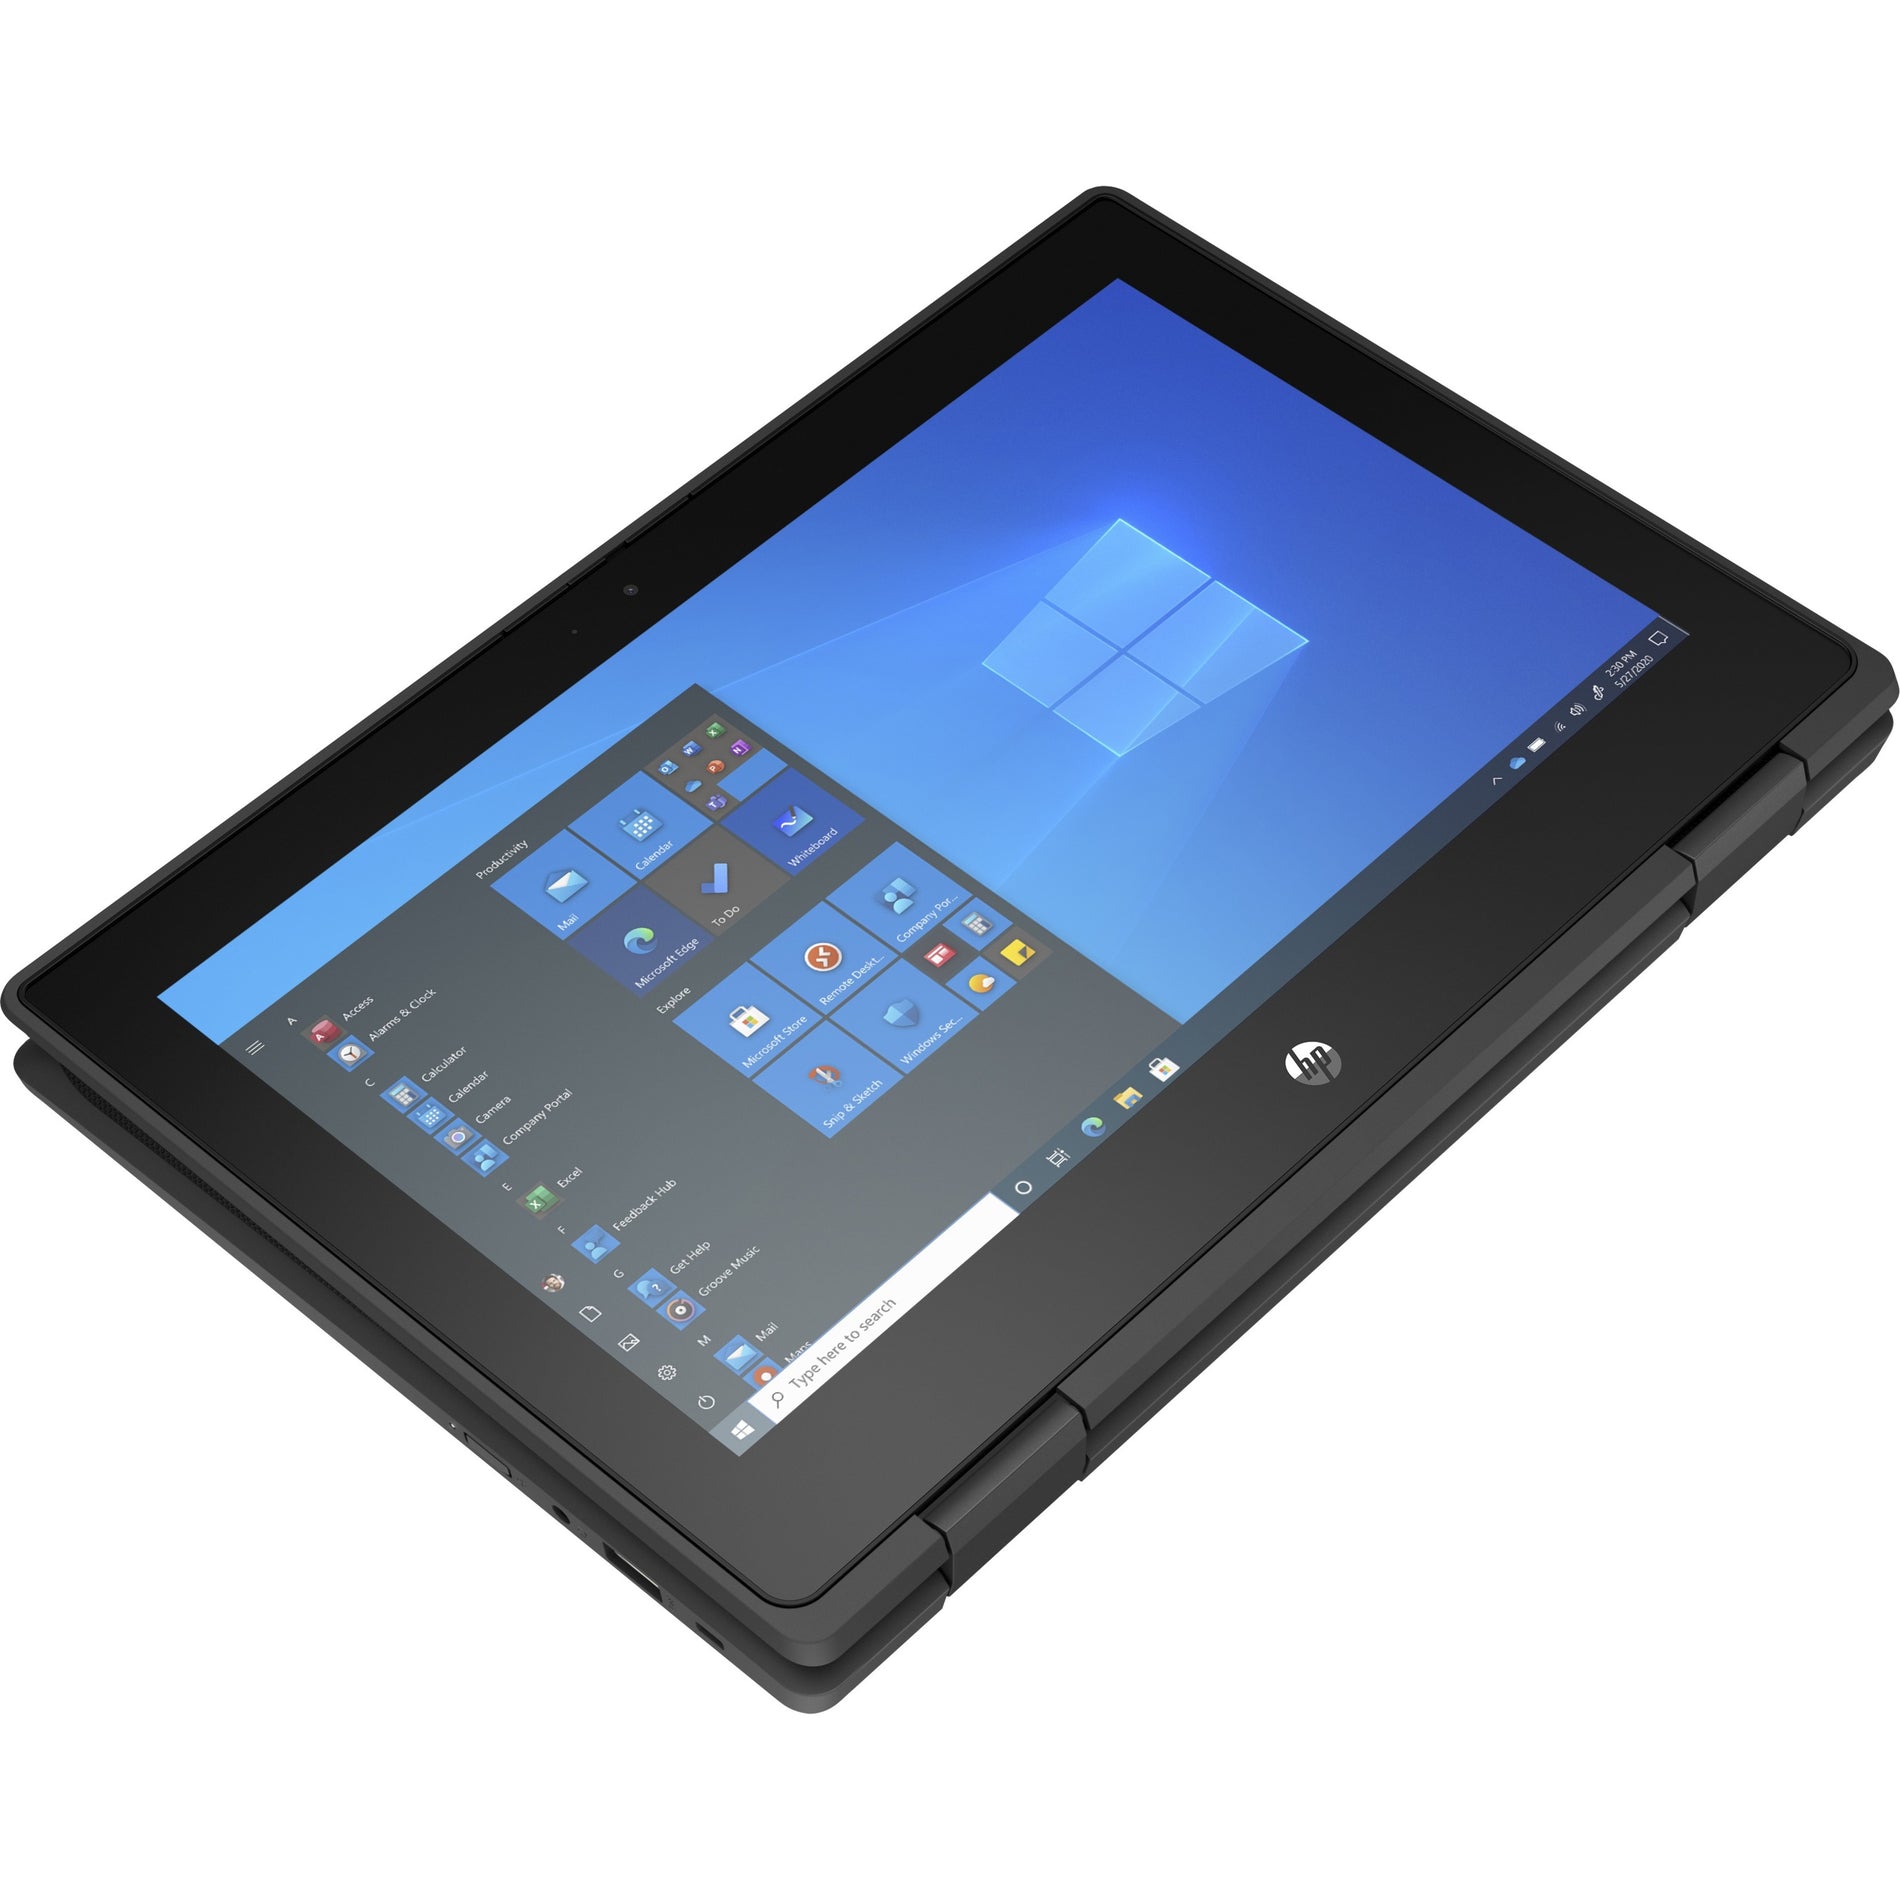 HP ProBook x360 11 G7 EE 2 in 1 Notebook, 11.6" Touchscreen, Intel Celeron N5100, 4GB RAM, 64GB Flash Memory